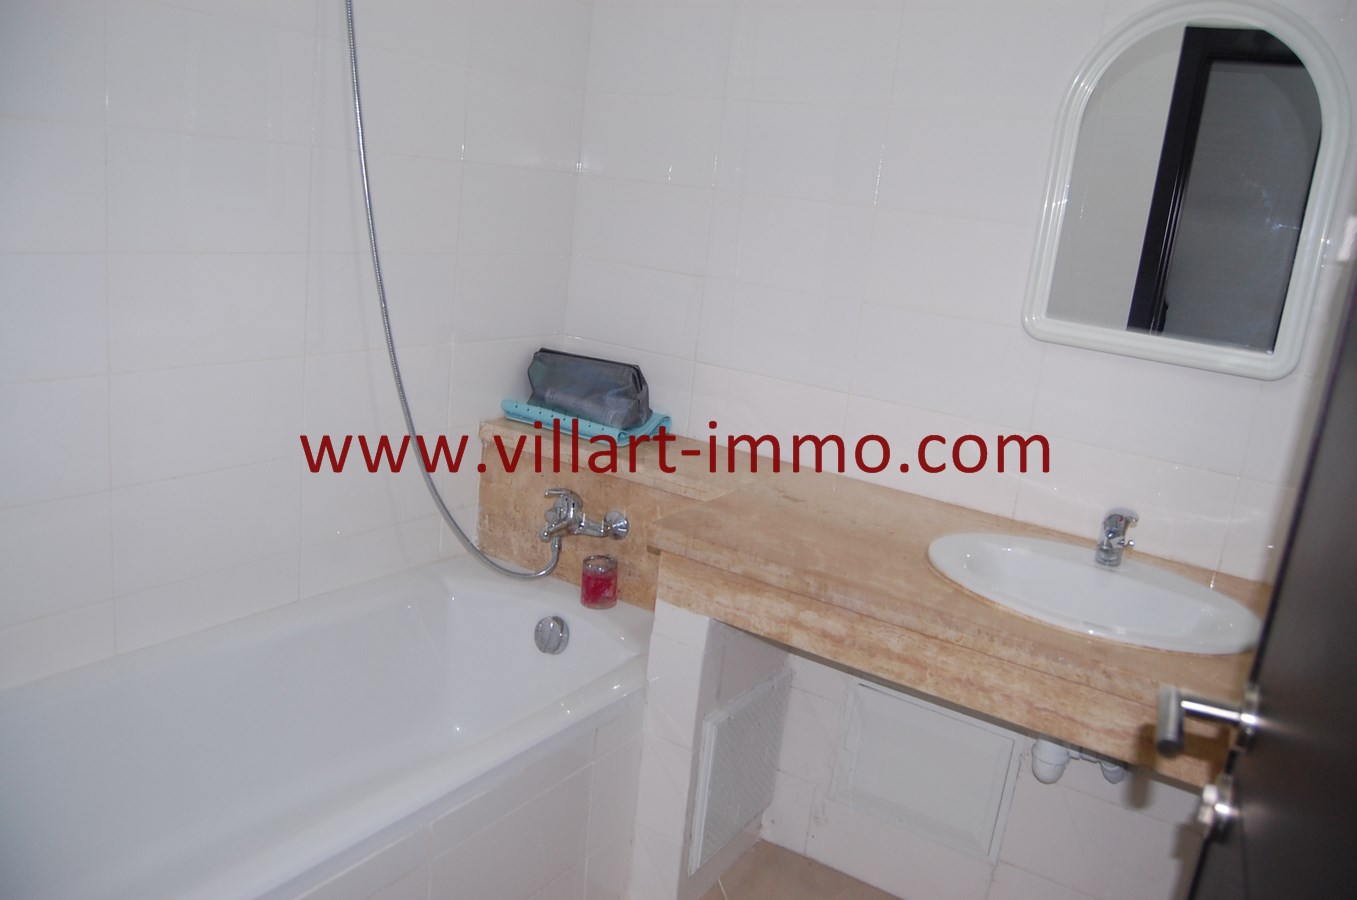 8-Vente-Appartement-Tanger-Route-de-Rabat-salle-de-Bain 1-VA474-Villart Immo